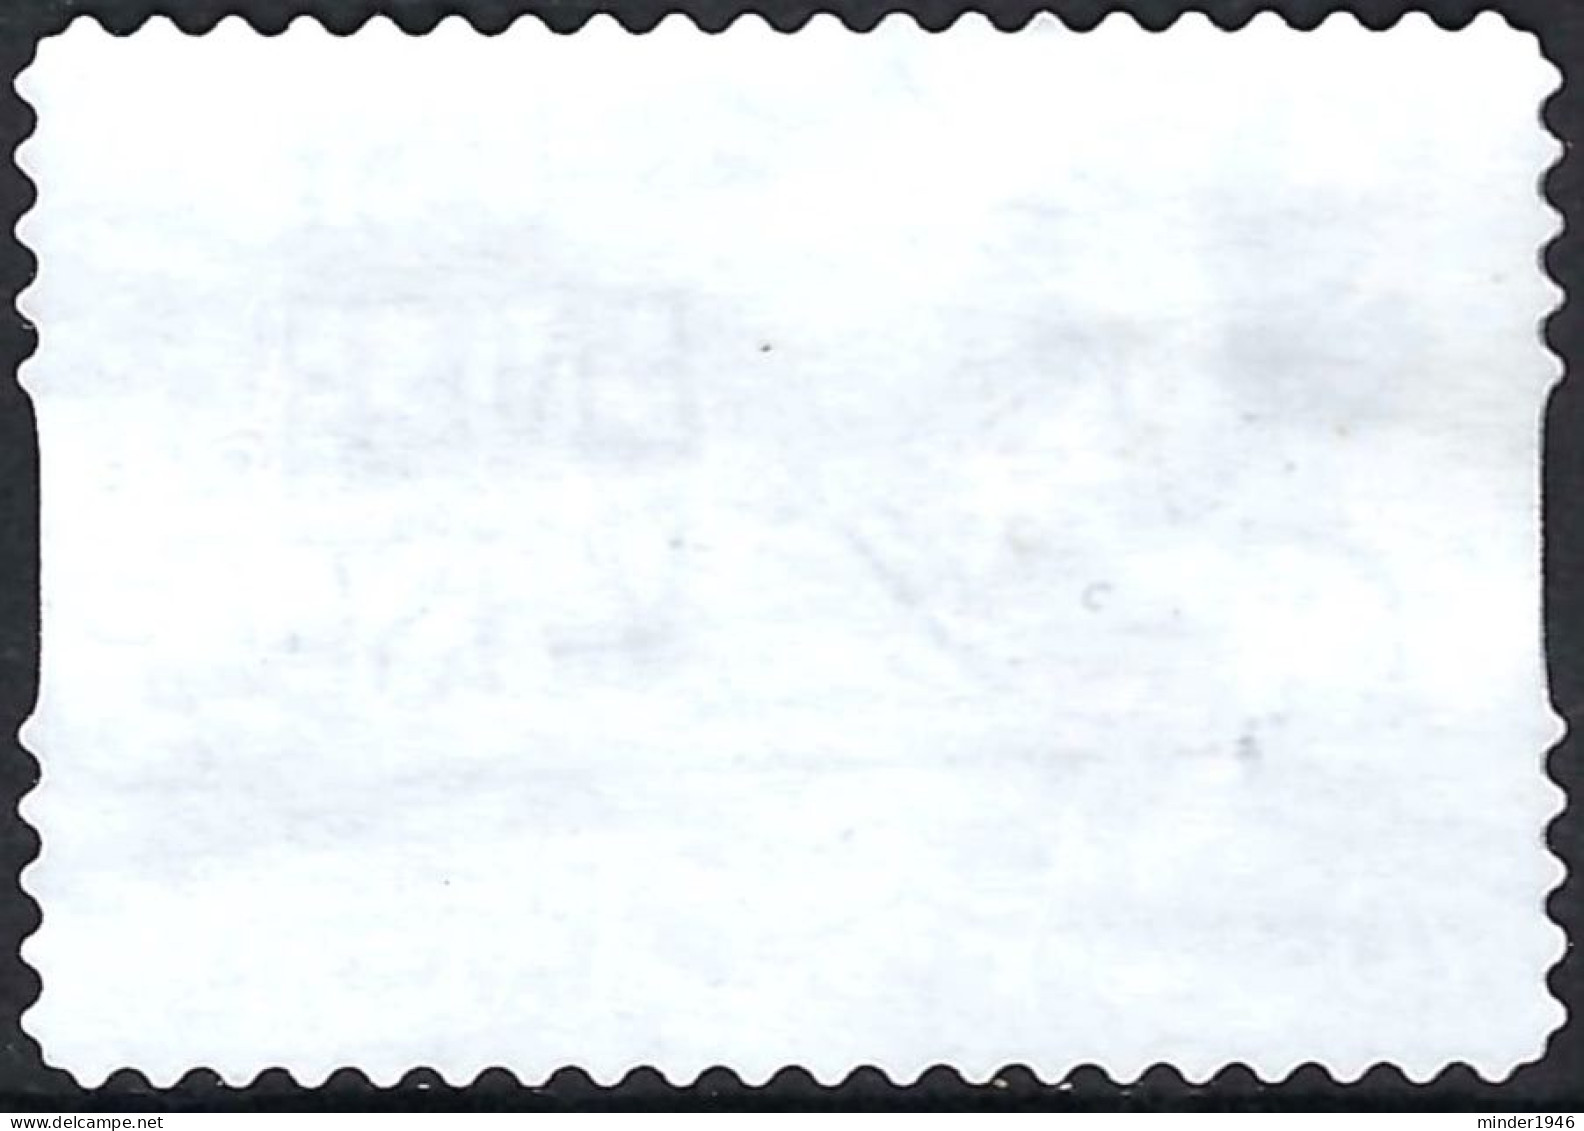 AUSTRALIA 2014 QEII 70c Multicoloured, Bush Ballads-Waltzing Matilda Self Adhesive Stamp SG4181 FU - Oblitérés